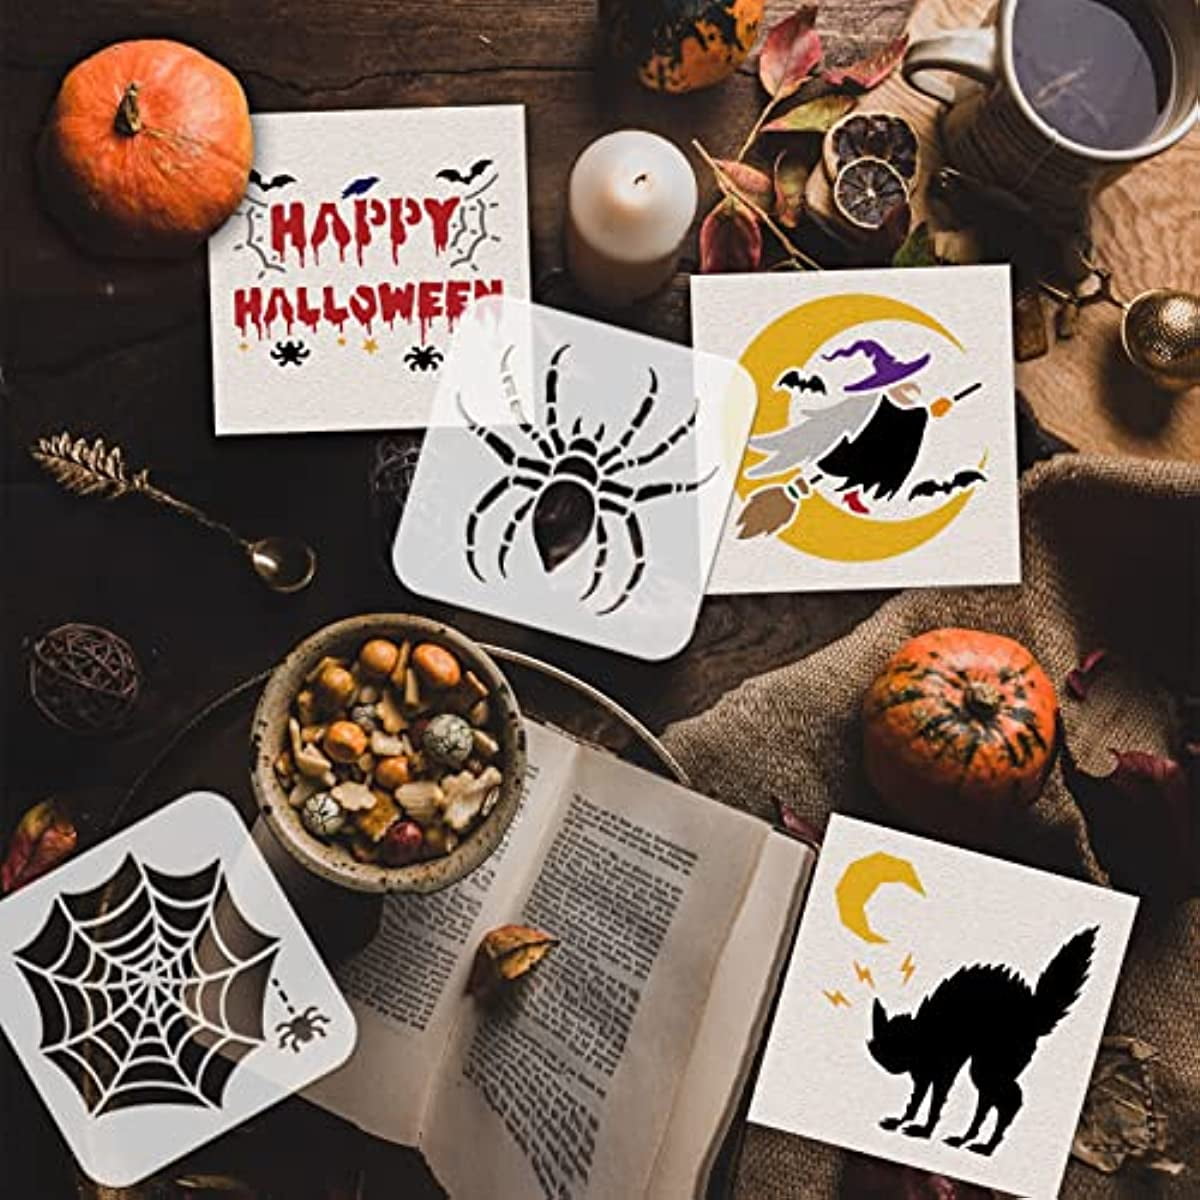 12PCS Halloween Themed Drawing Stencils 6x6 Happy Halloween Pumpkin Bat  Ghost Template for Scrabooking Card Making Wall Floor Art 